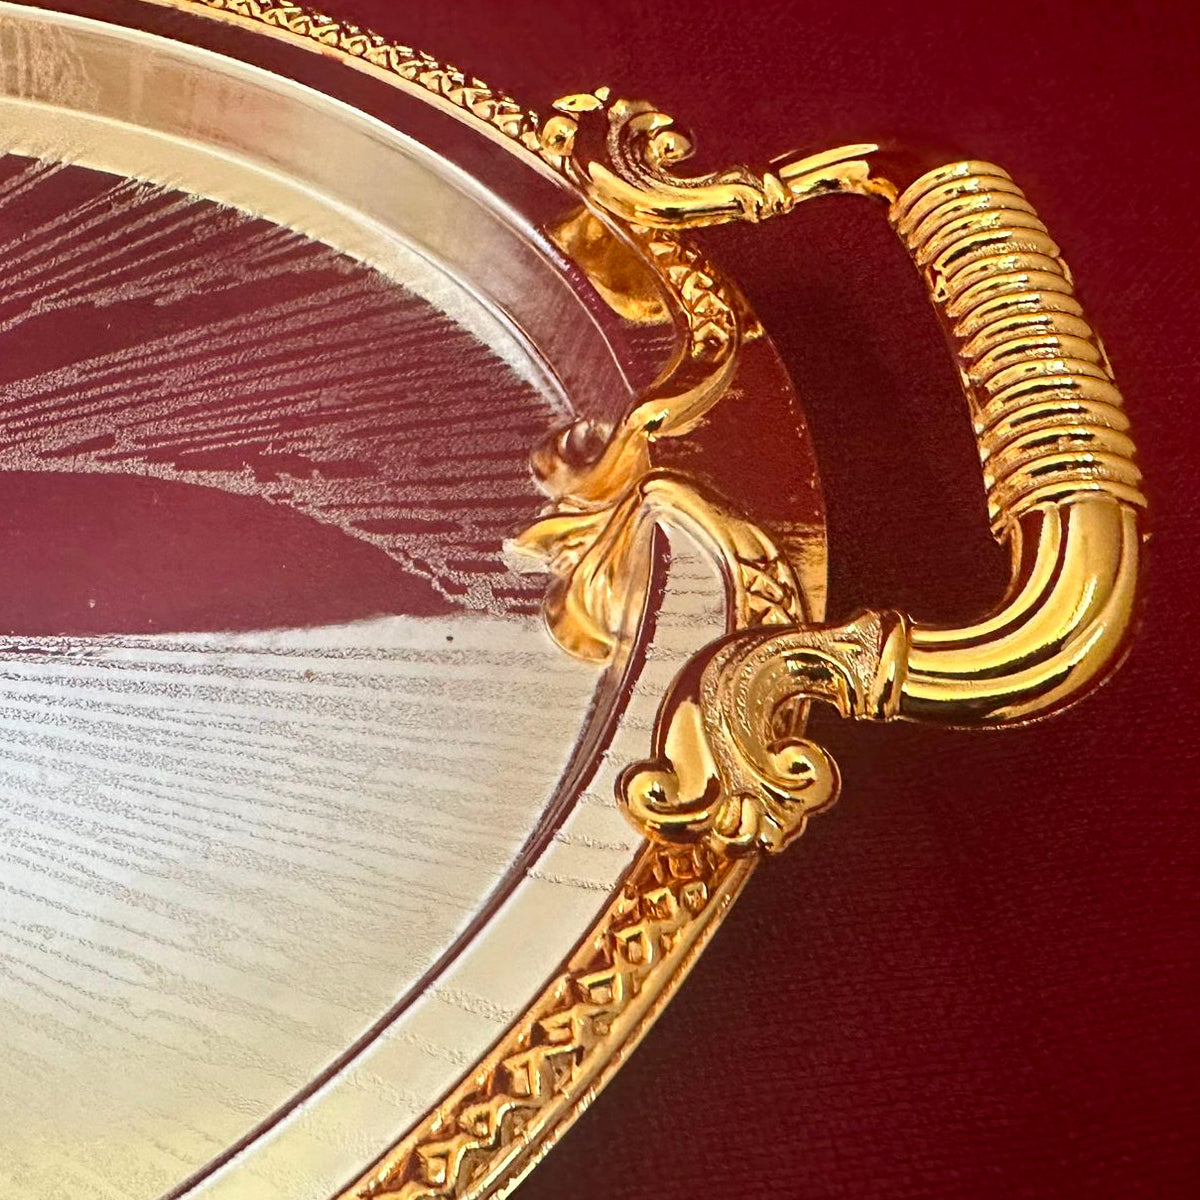 Vergoldetes Meisterstück: Mittelgroßes ovales Tablett mit edlem Glanz